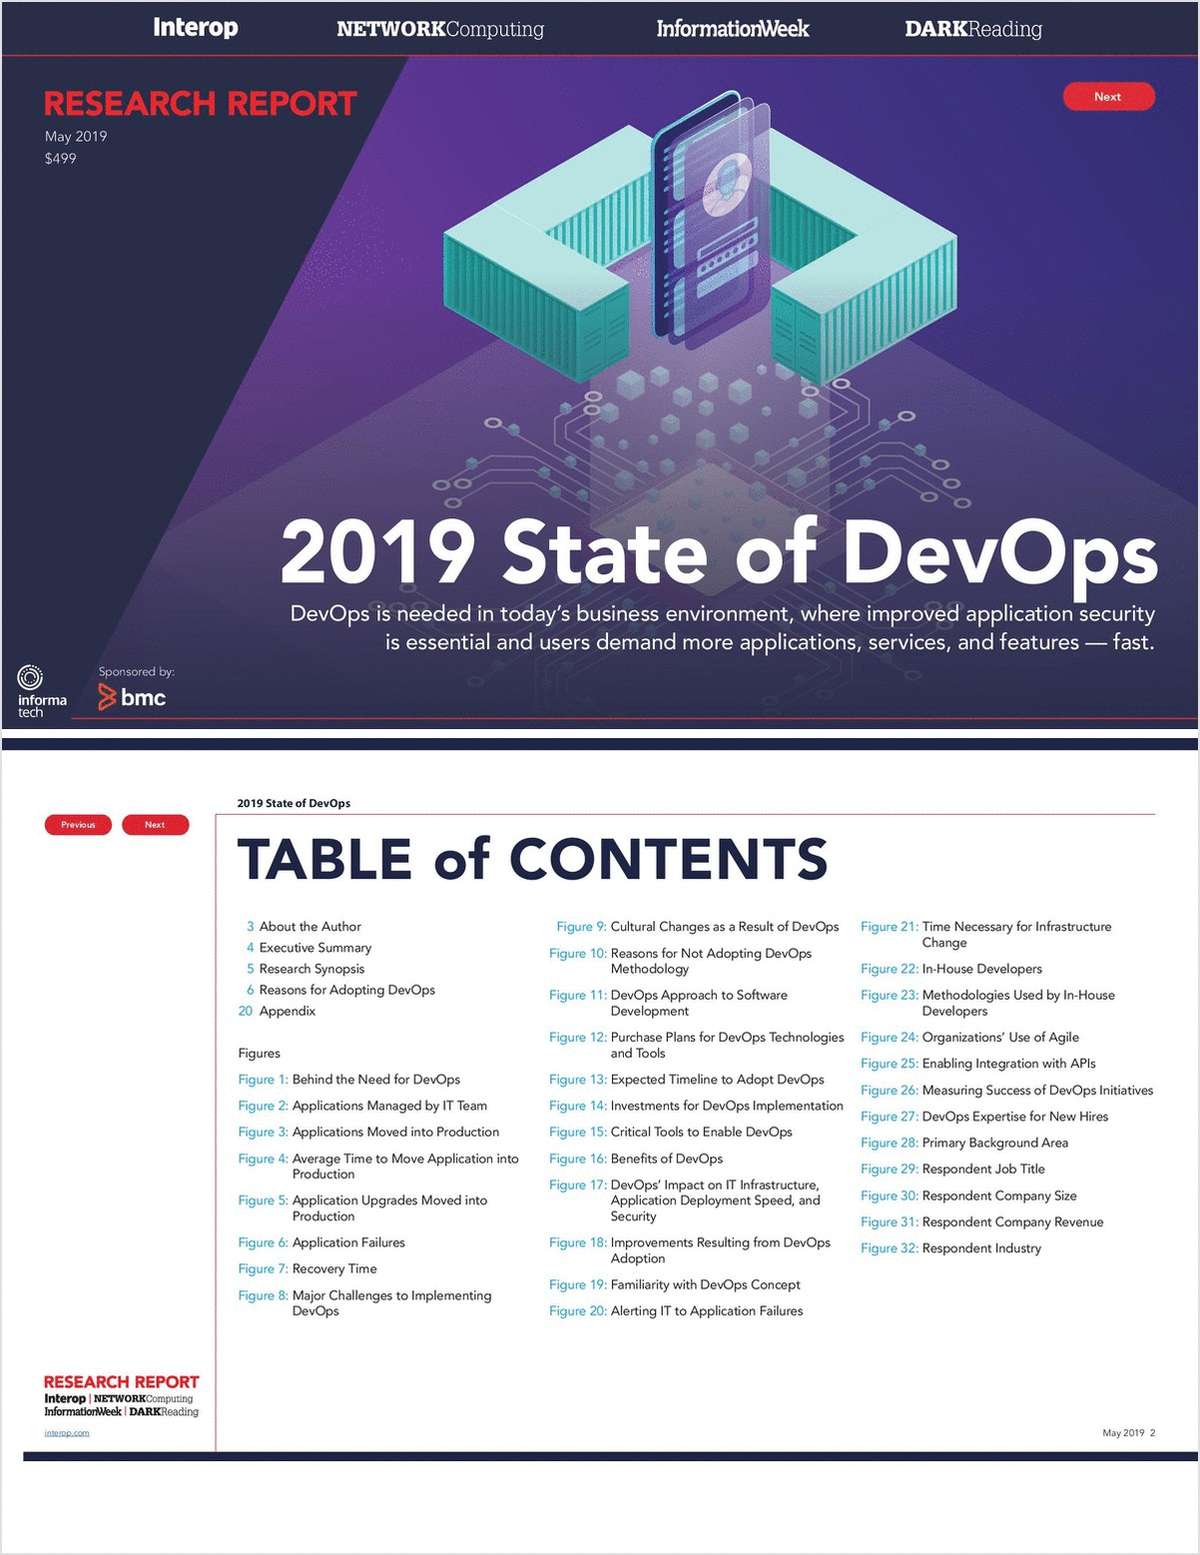 2019 State of DevOps